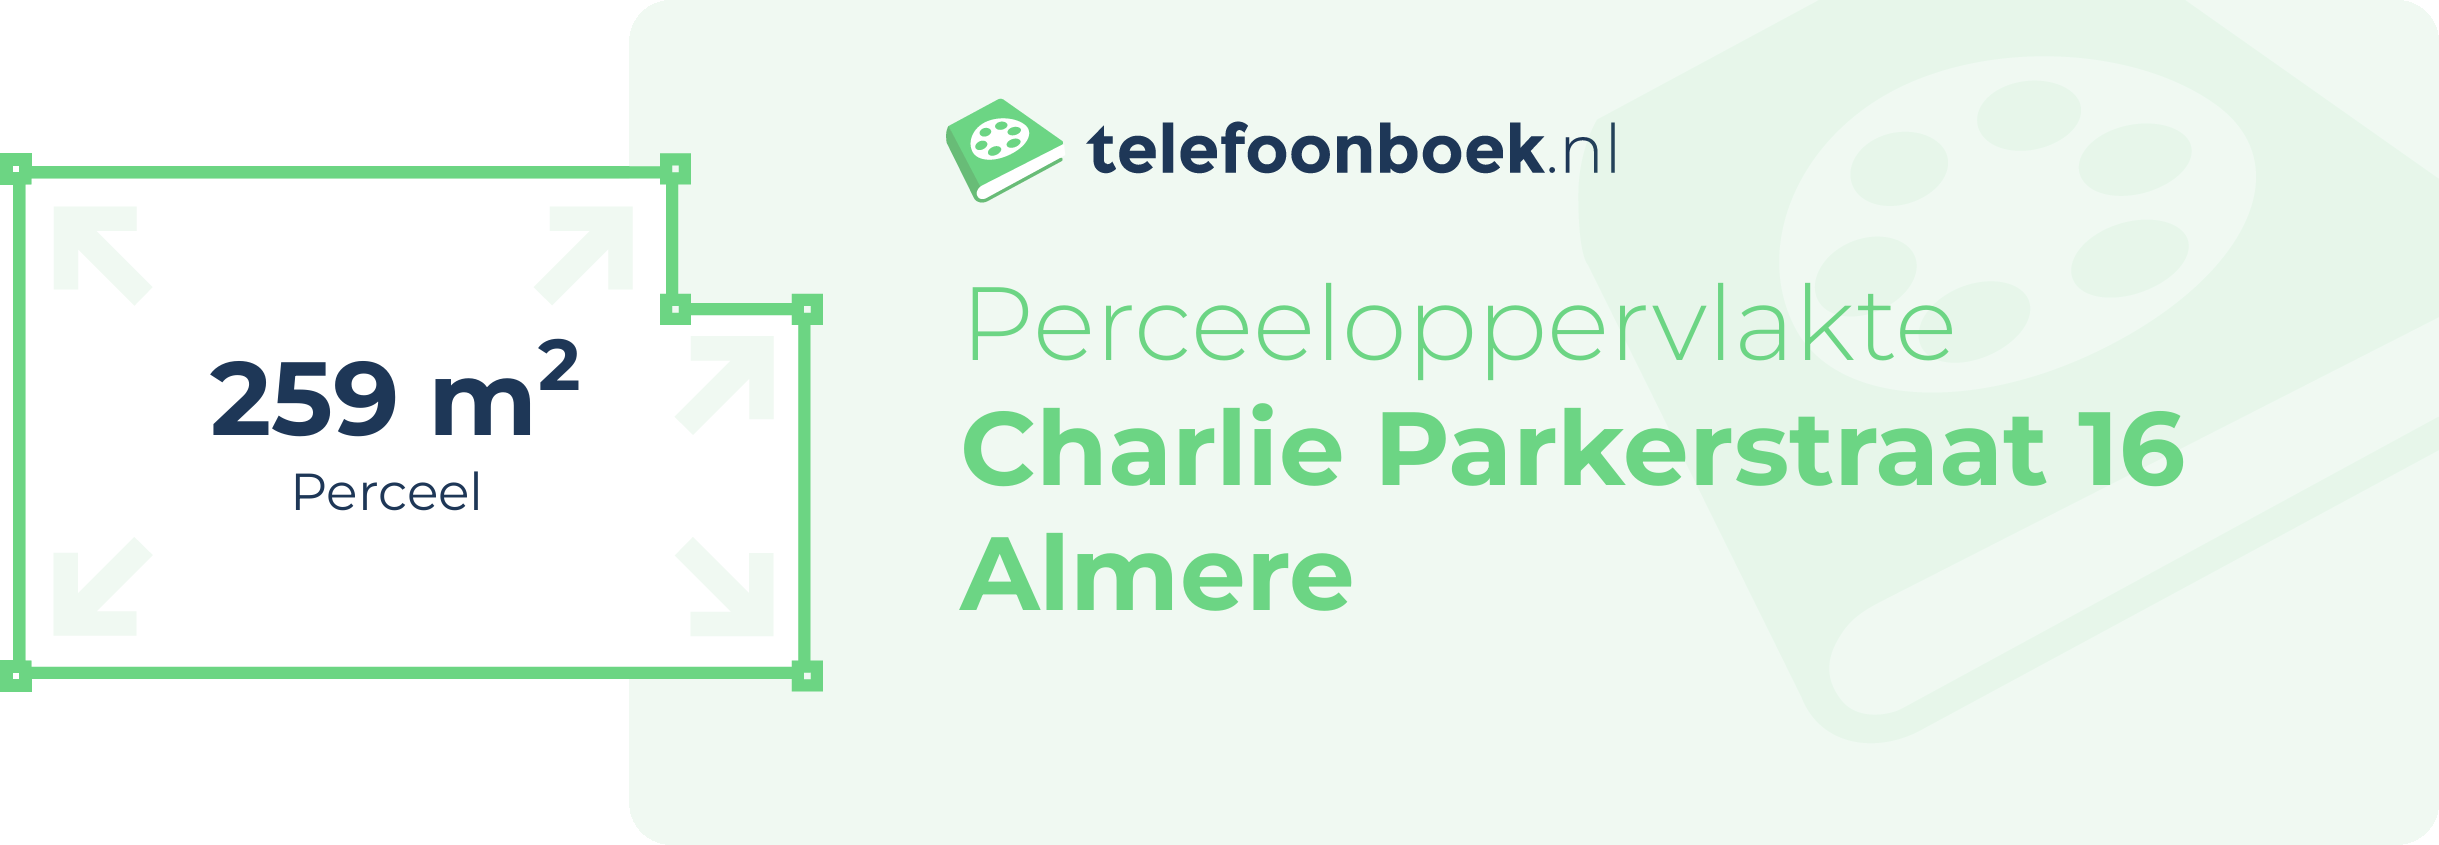 Perceeloppervlakte Charlie Parkerstraat 16 Almere